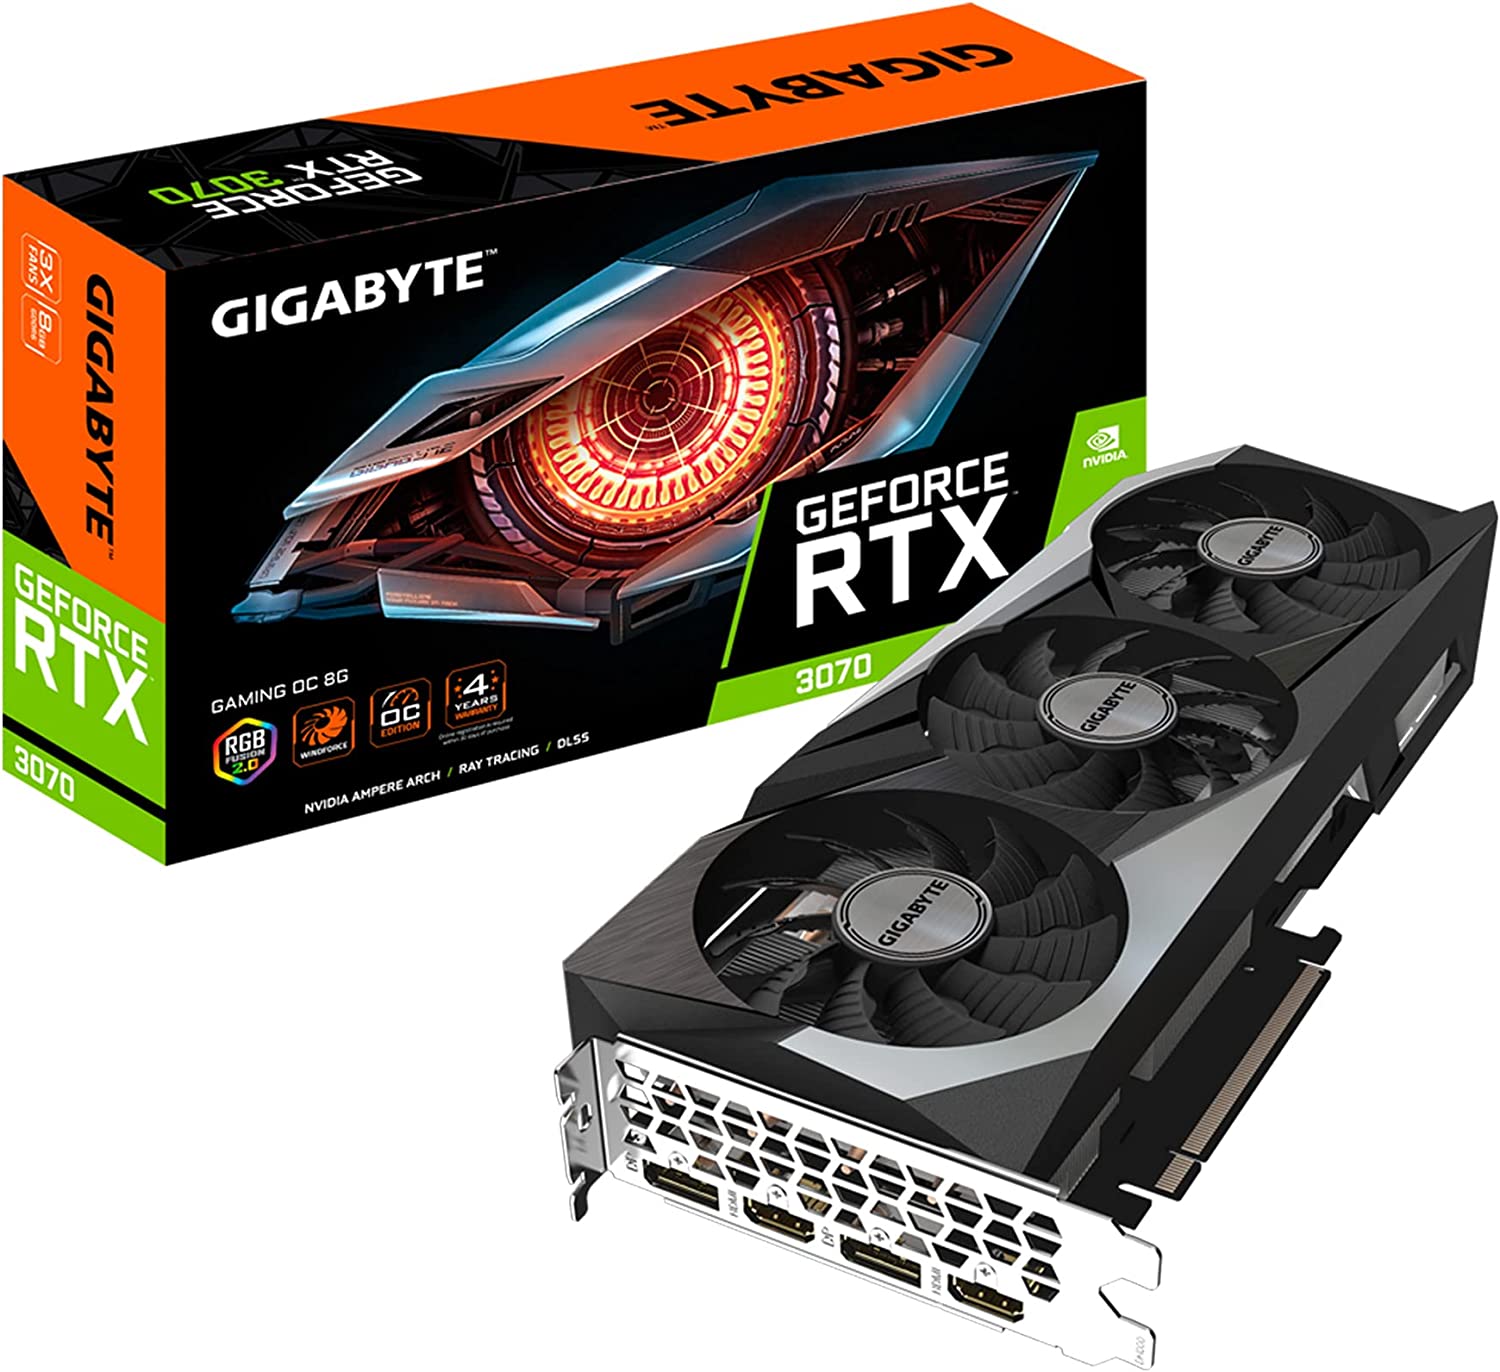 GIGABYTE GeForce RTX 3070 Gaming OC 8G (REV2.0) Graphics Card, 3X WINDFORCE Fans, LHR, 8GB 256-bit GDDR6, GV-N3070GAMING OC-8GD REV2.0 Video Card